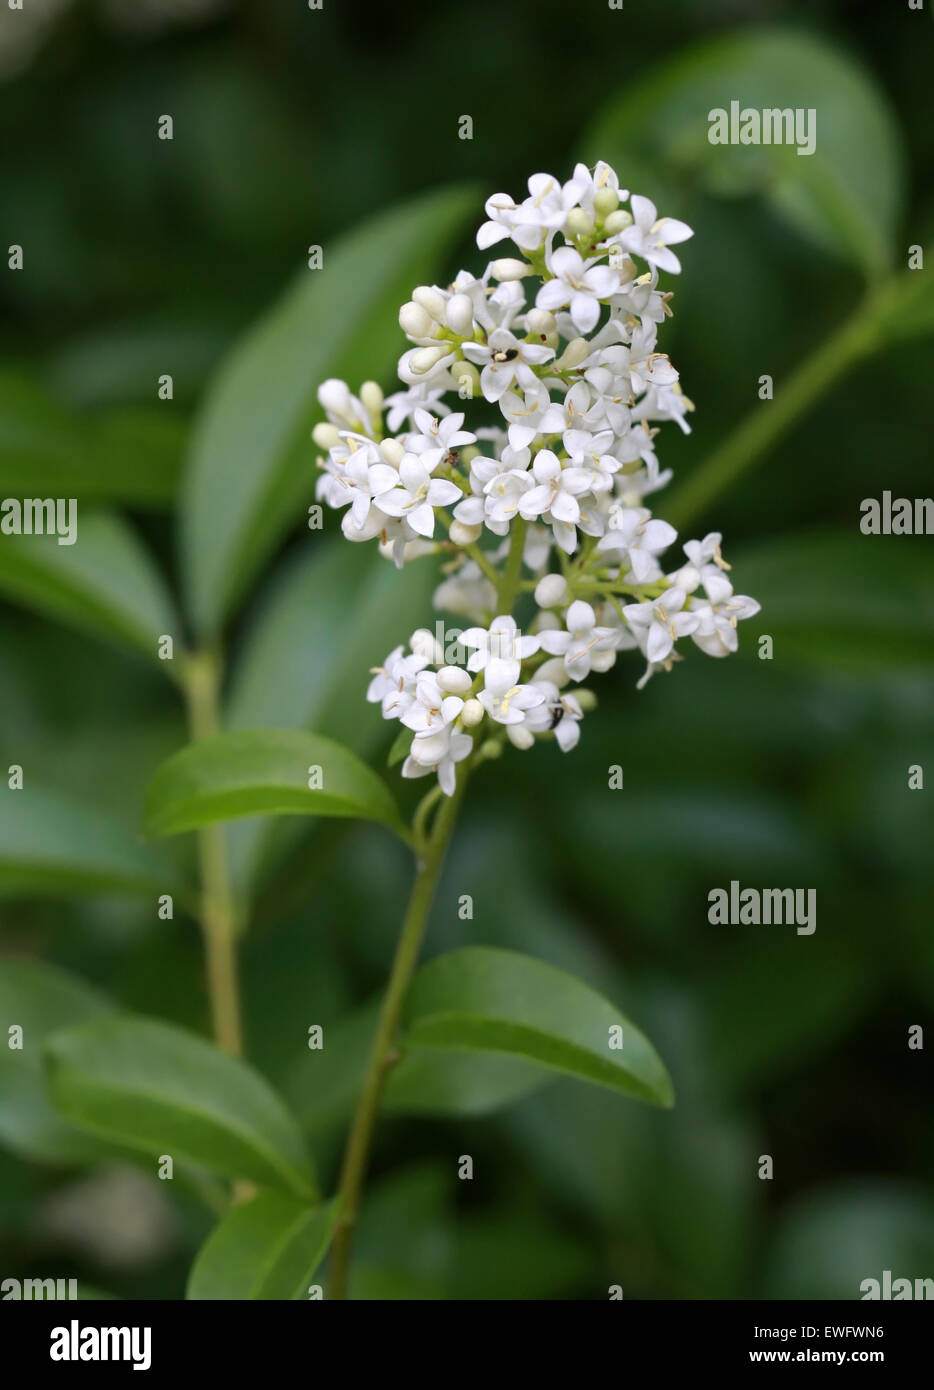 Privet Privet común o europeo, Ligustrum vulgare, Oleaceae. Foto de stock